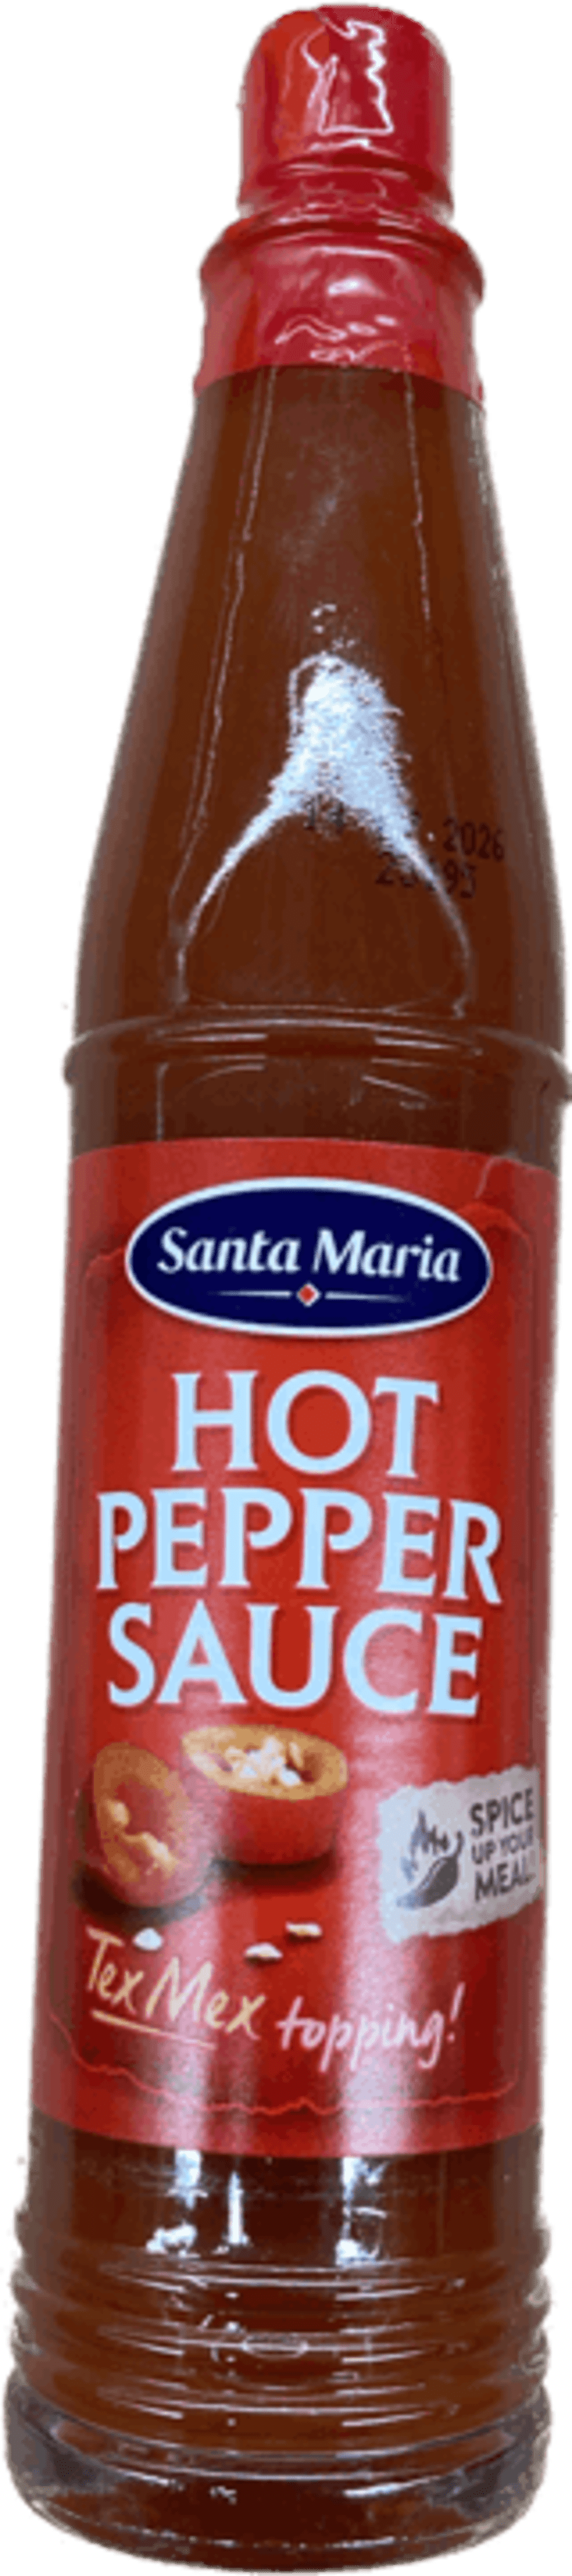 S.m hot peppersauce 85 ml